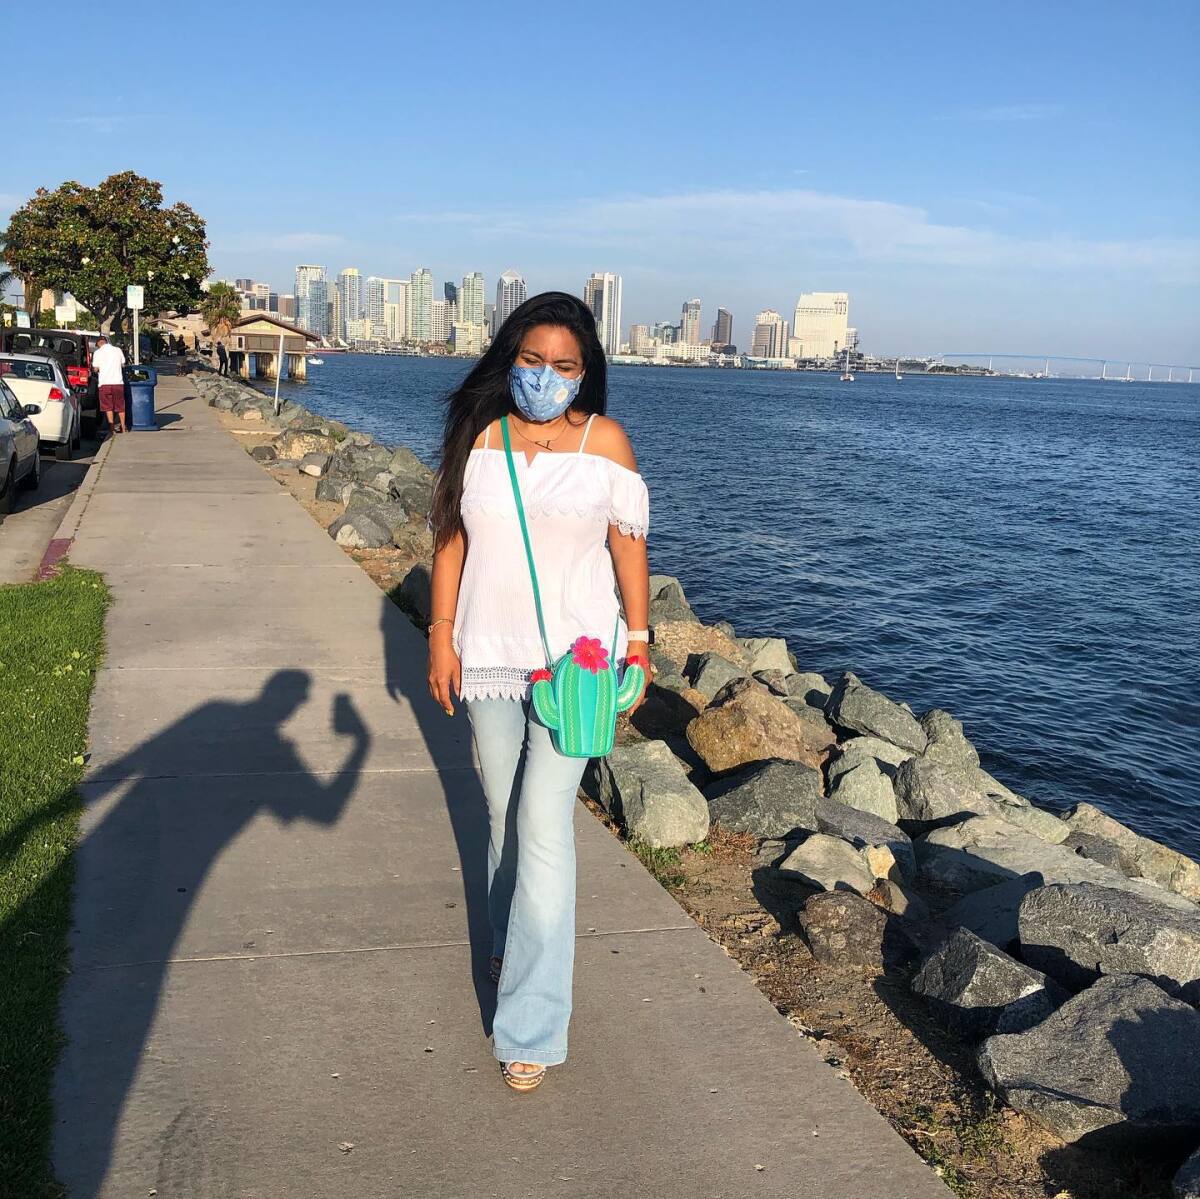 Andrea Figueroa Pelliccia at Harbor Island on July 9, 2020 in San Diego, California.